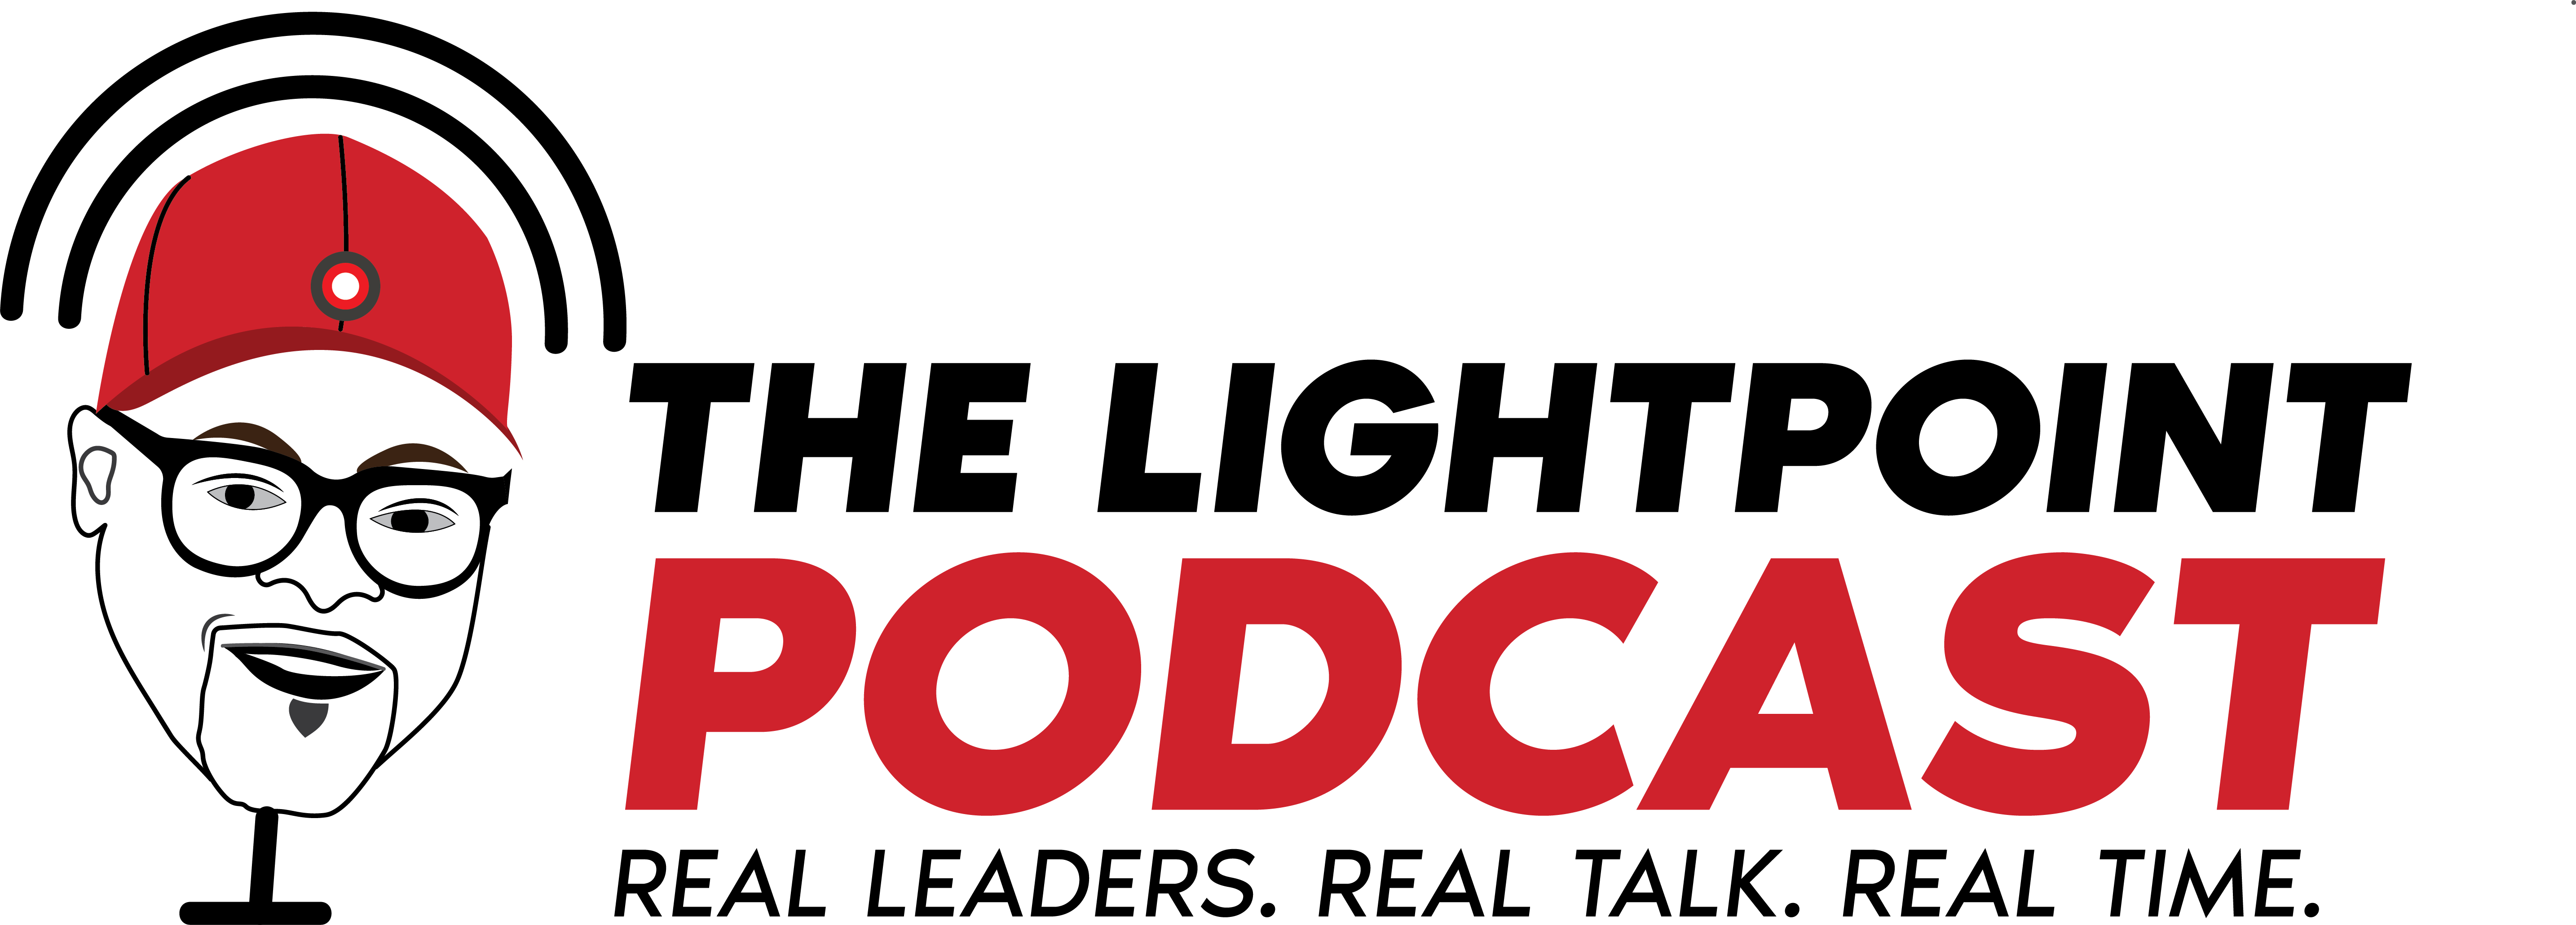 The LIGHTPOINT Podcast logo